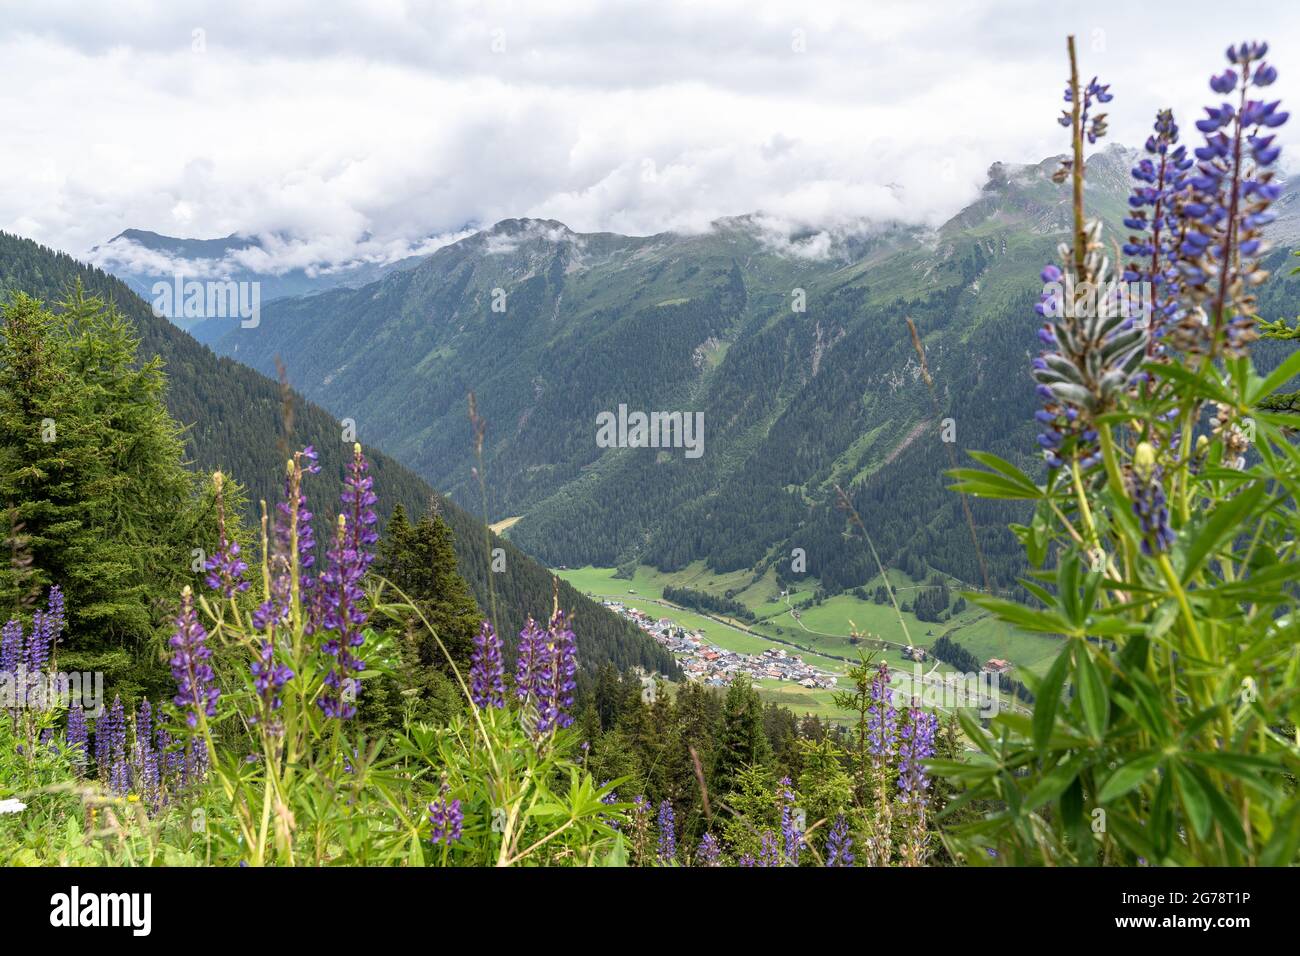 Europa, Austria, Tirolo, Verwall, Paznaun, Galtür, rifugio Friedrichshafener, vista sulla valle di Paznaun Foto Stock